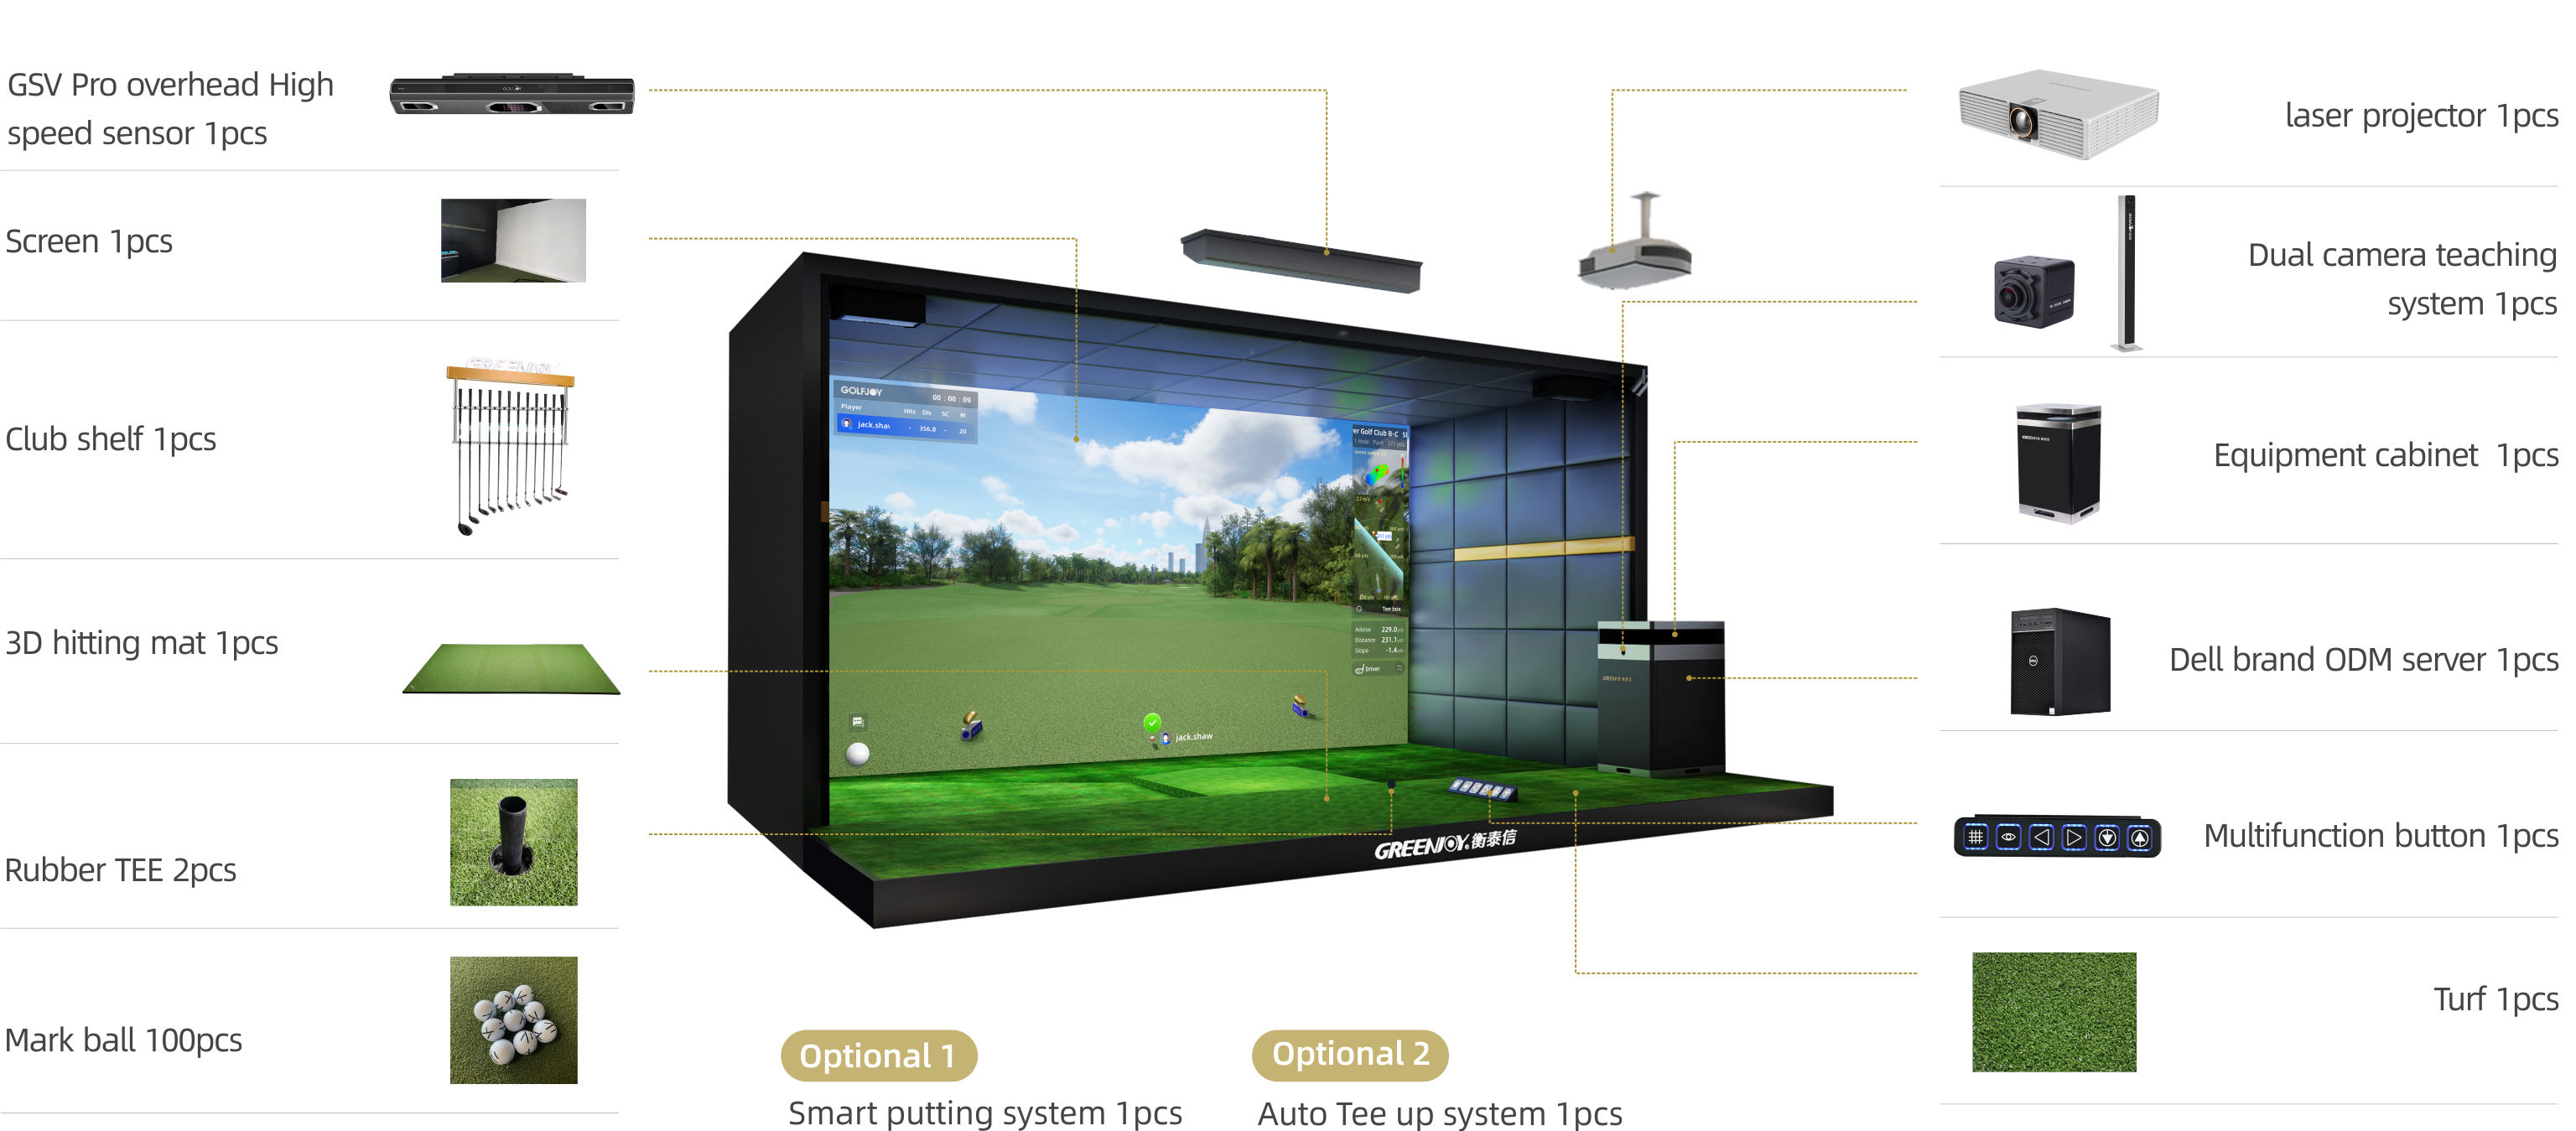 Gsv Pro Golf Simulator